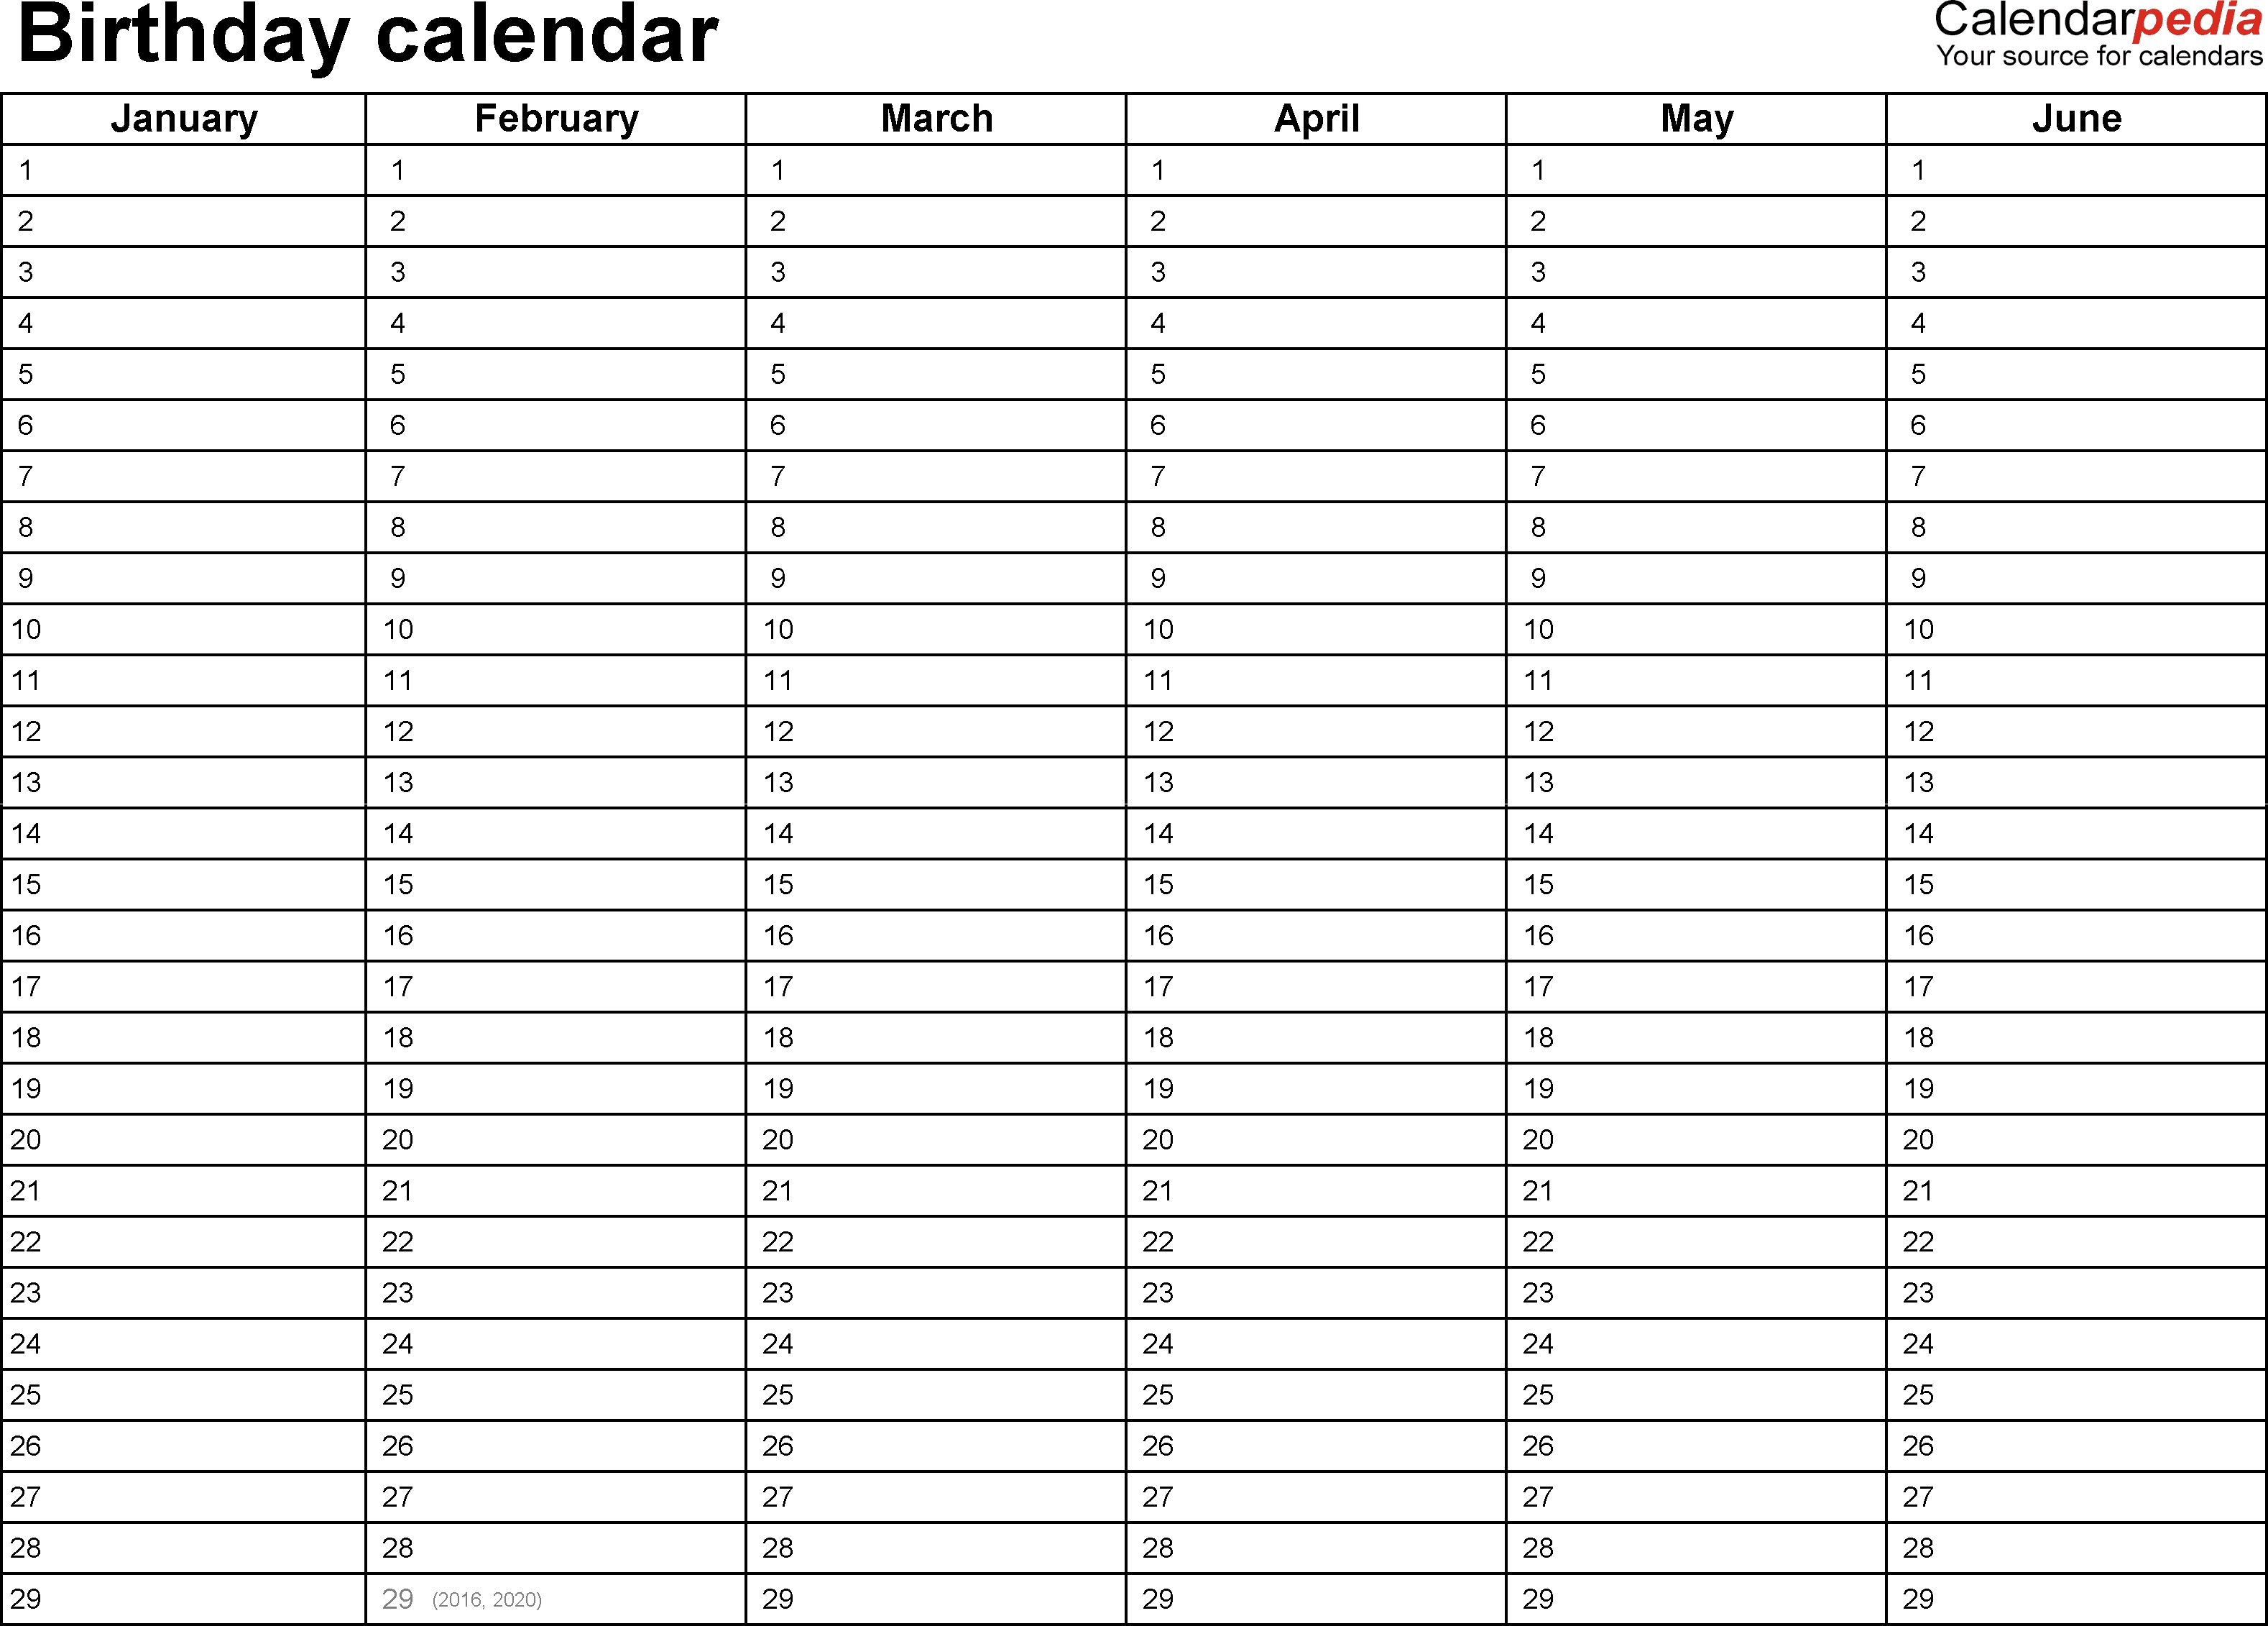 Birthday Calendars - 7 Free Printable Word Templates intended for Free Printable Birthday Calendar Yearly